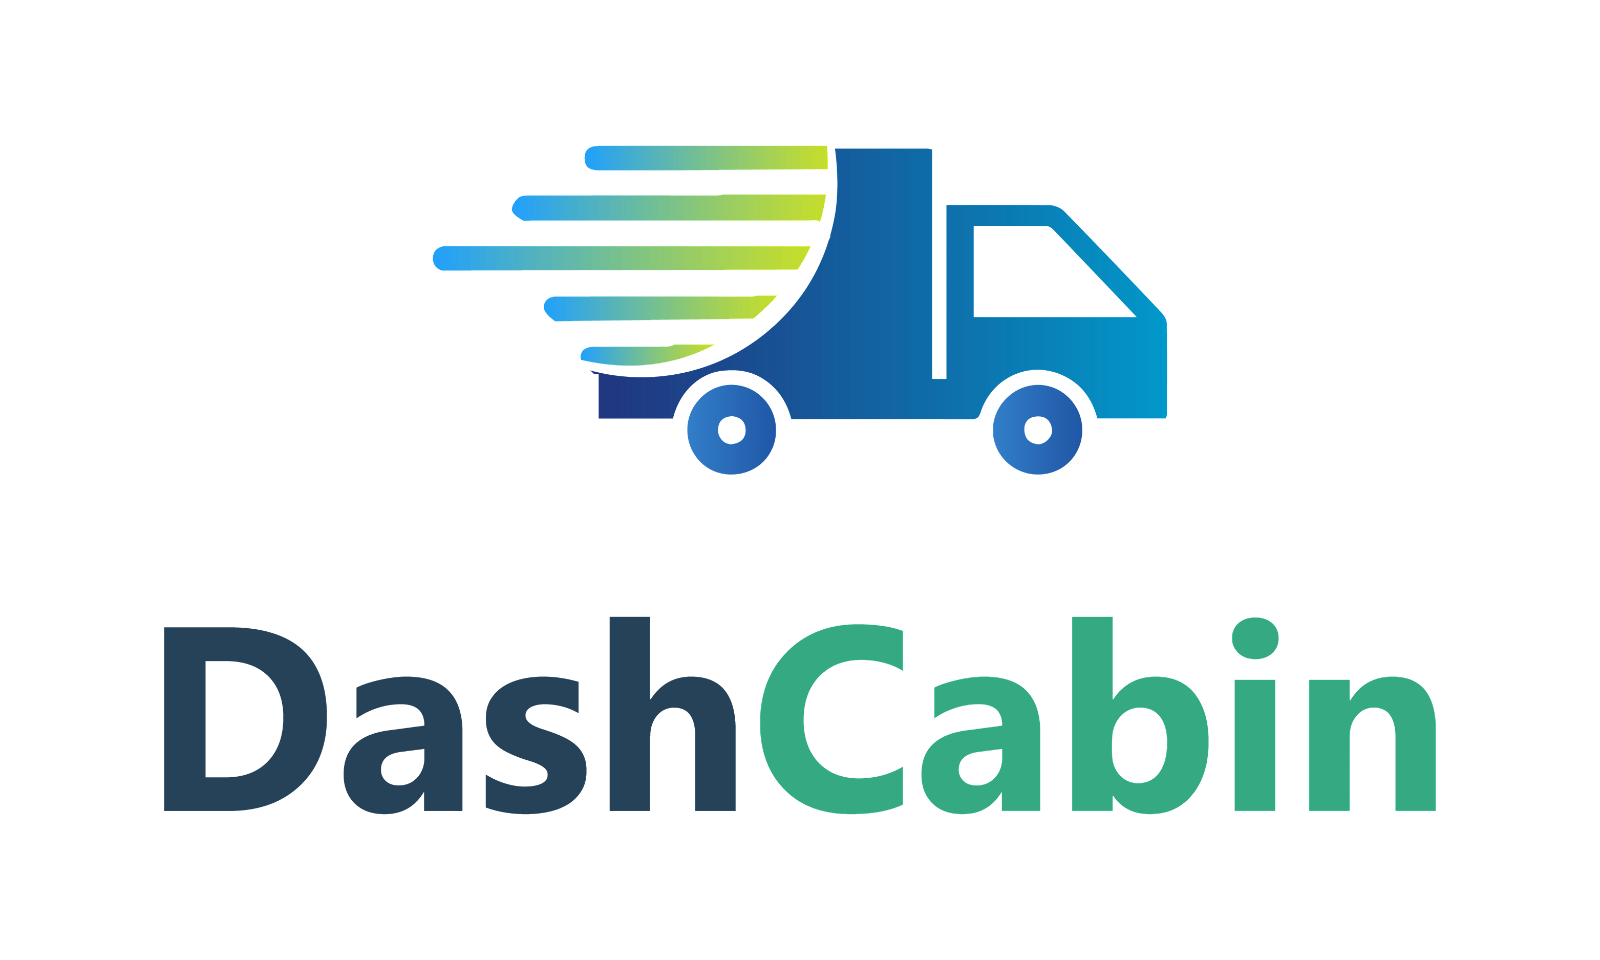 DashCabin.com - Creative brandable domain for sale